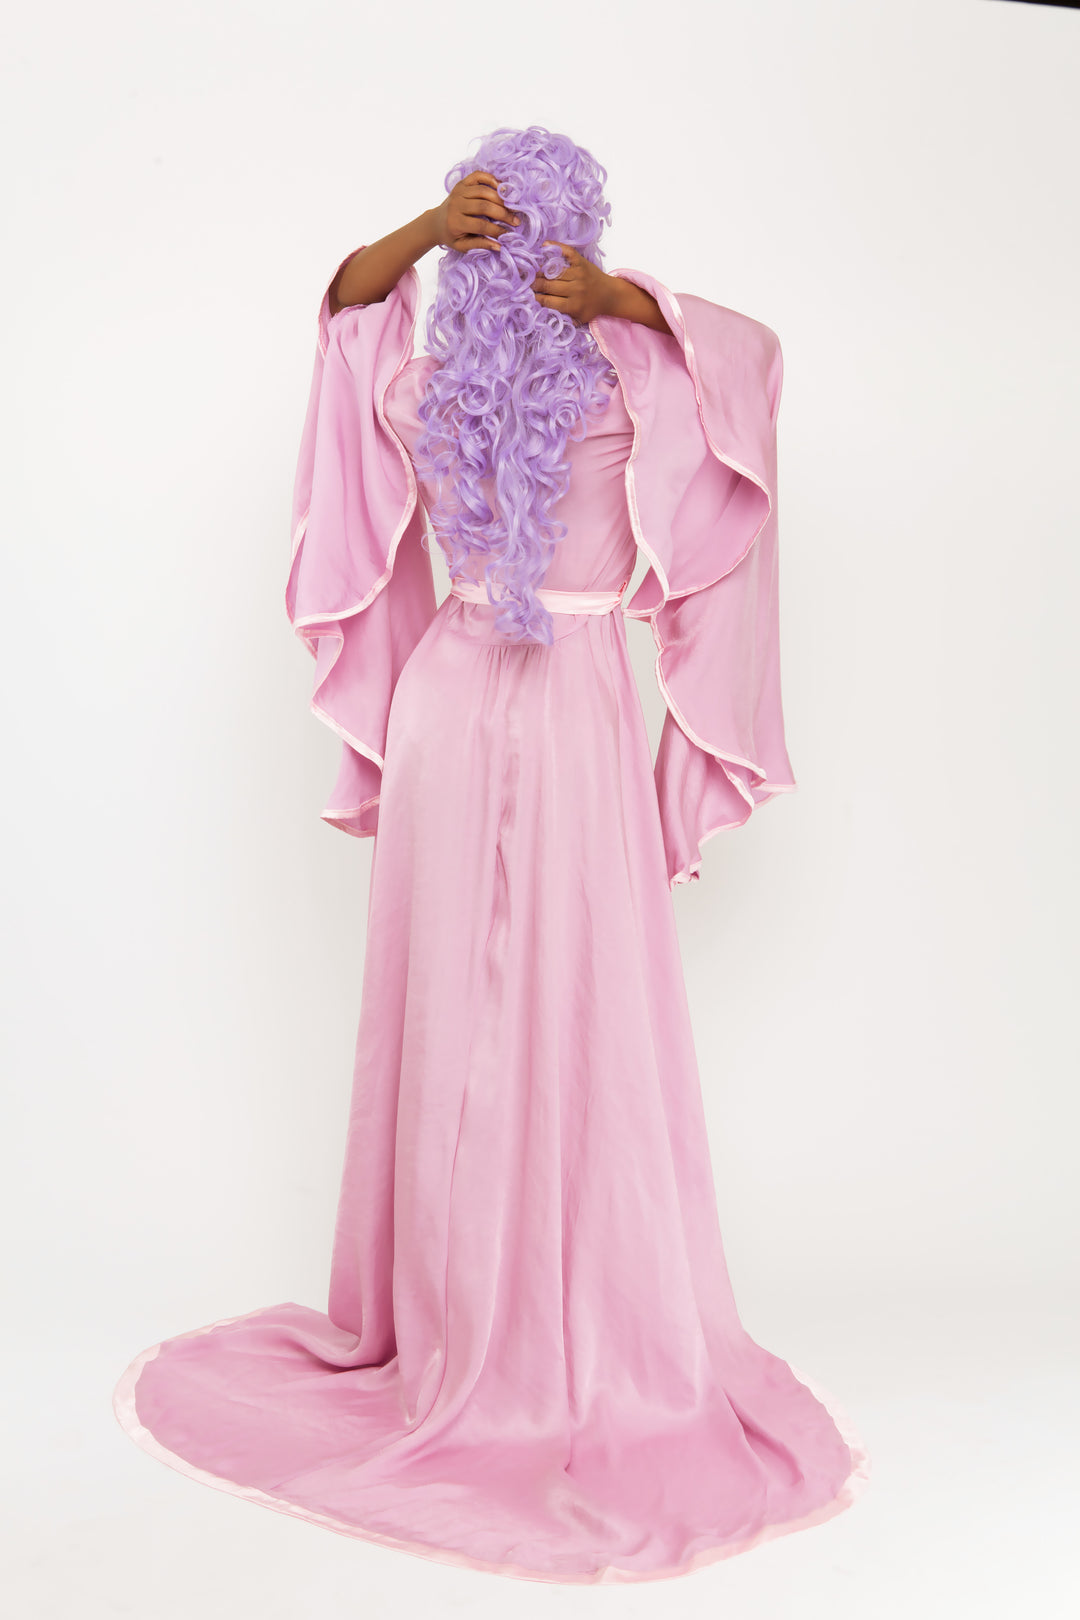 Bundle: The Viviana Robe and Nova Night Gown